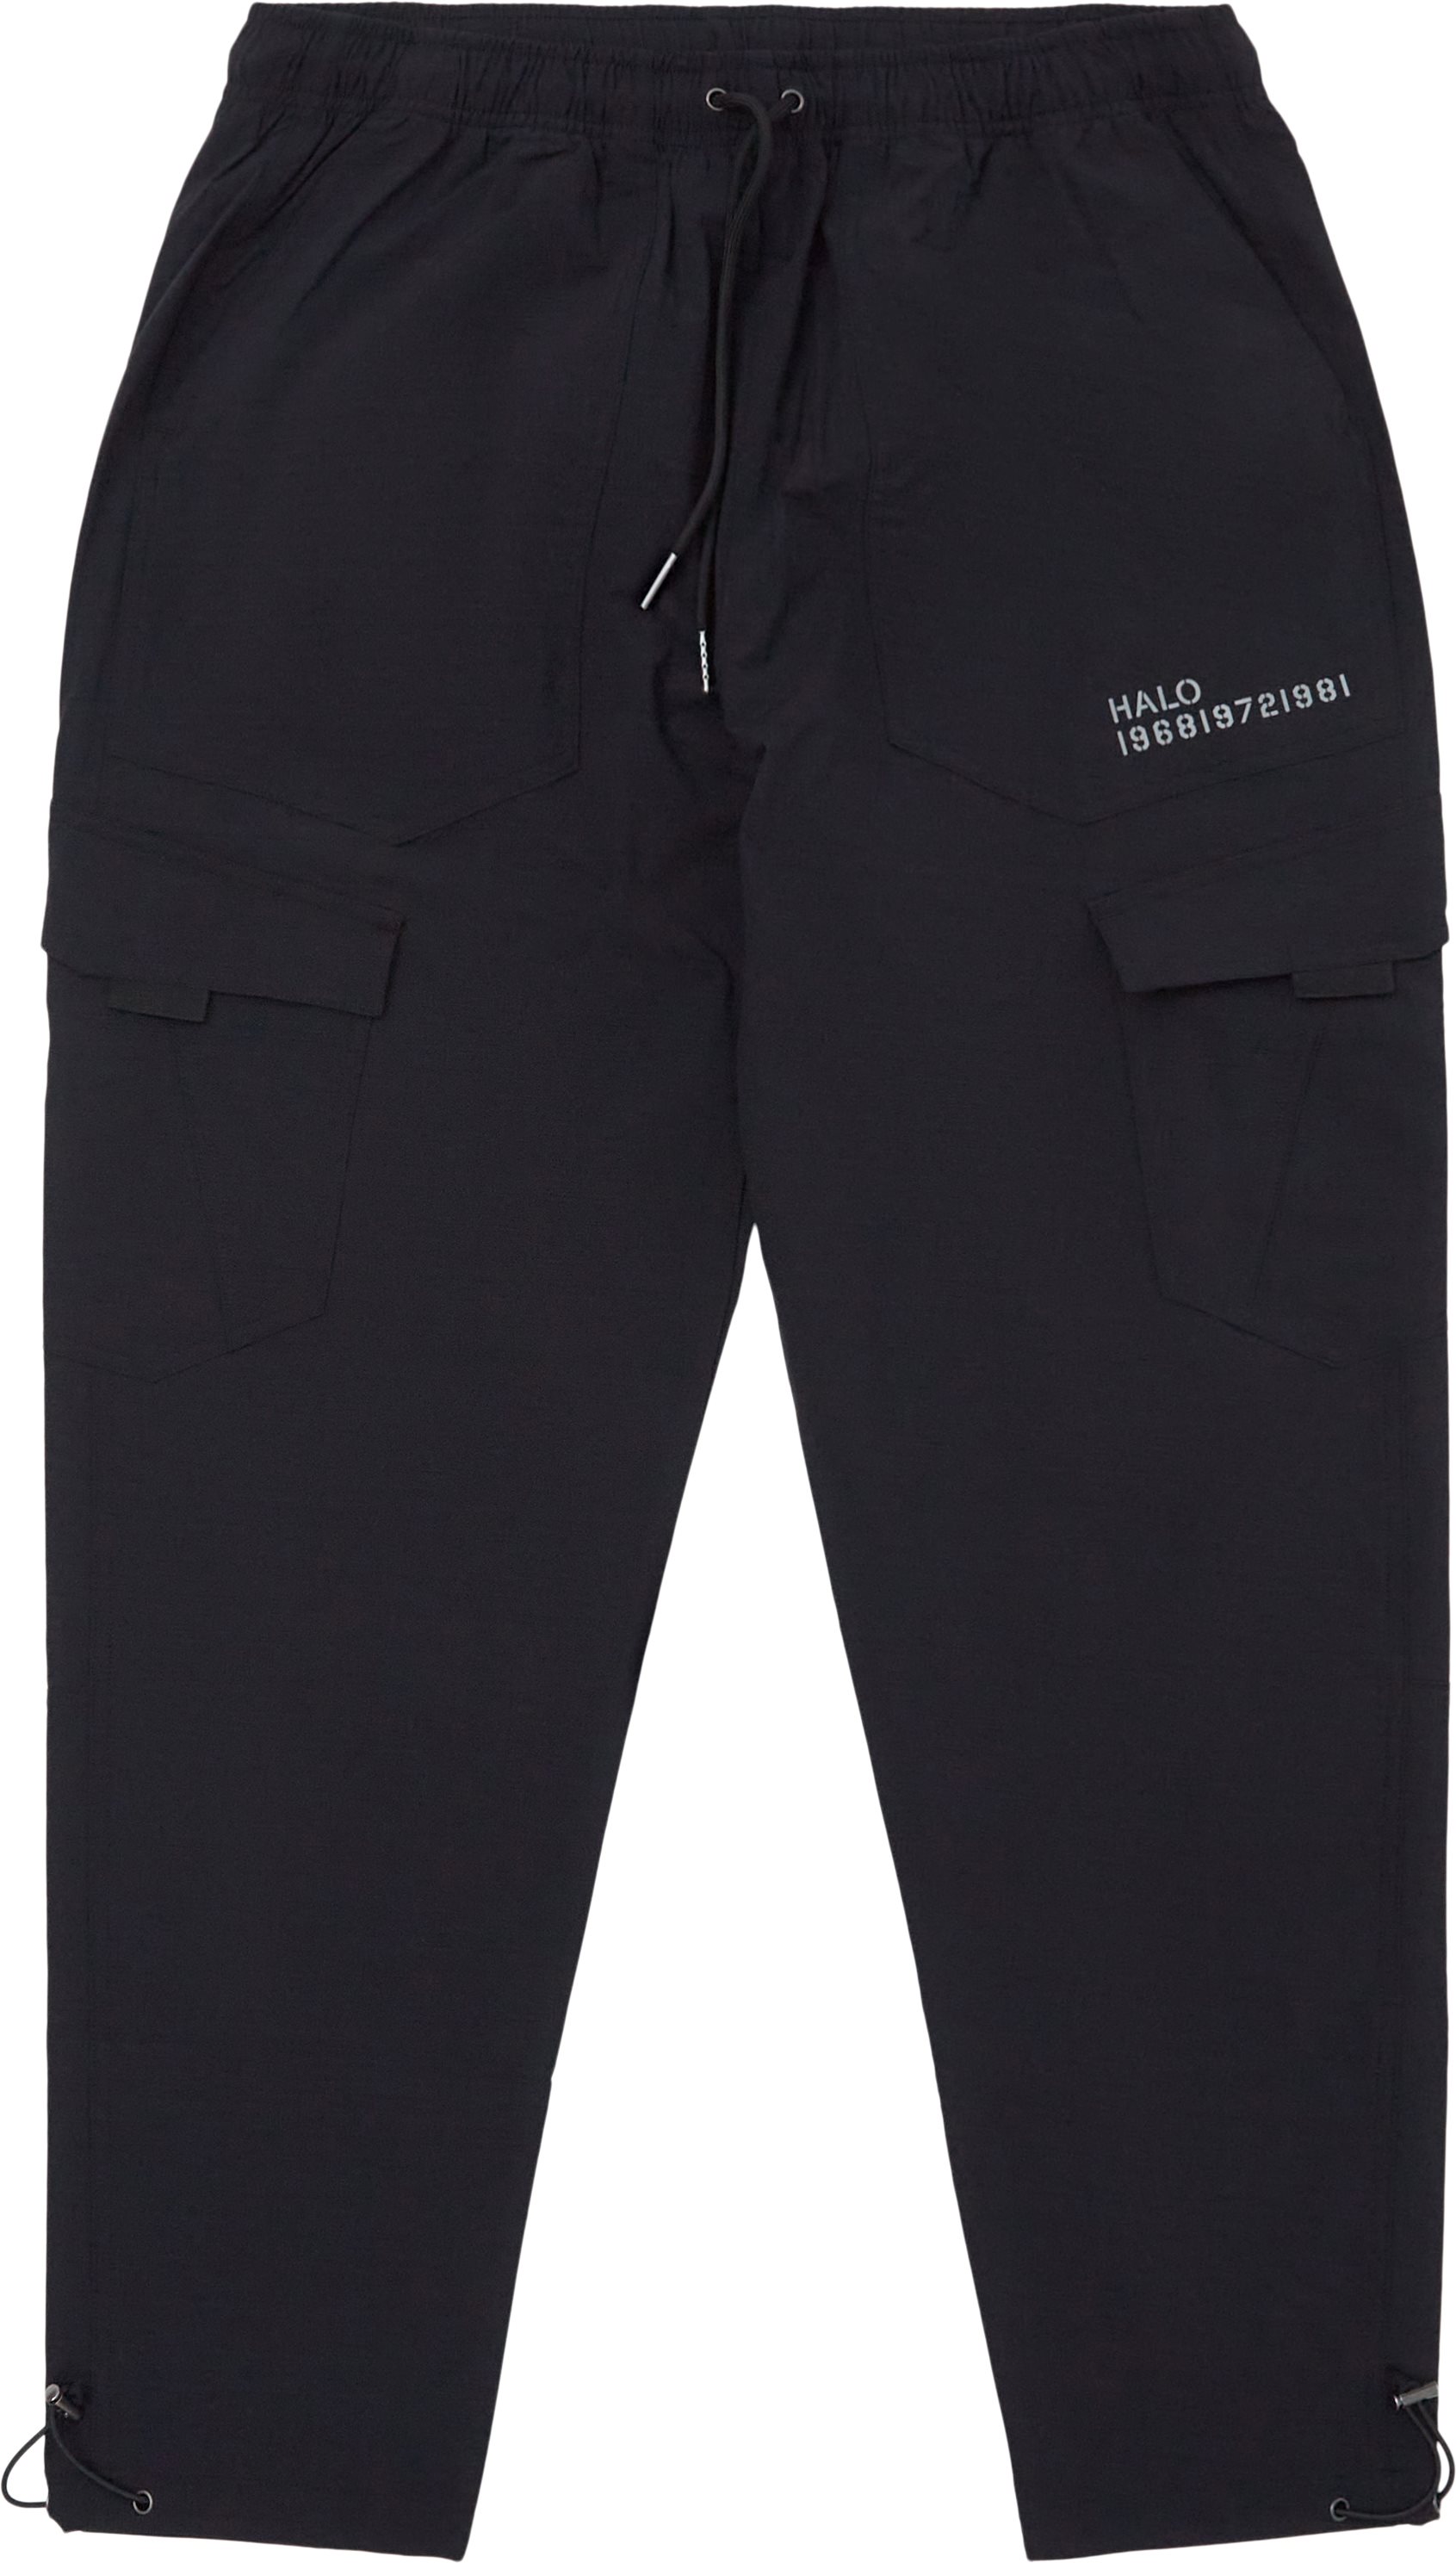 Trail Pant - Trousers - Regular fit - Black